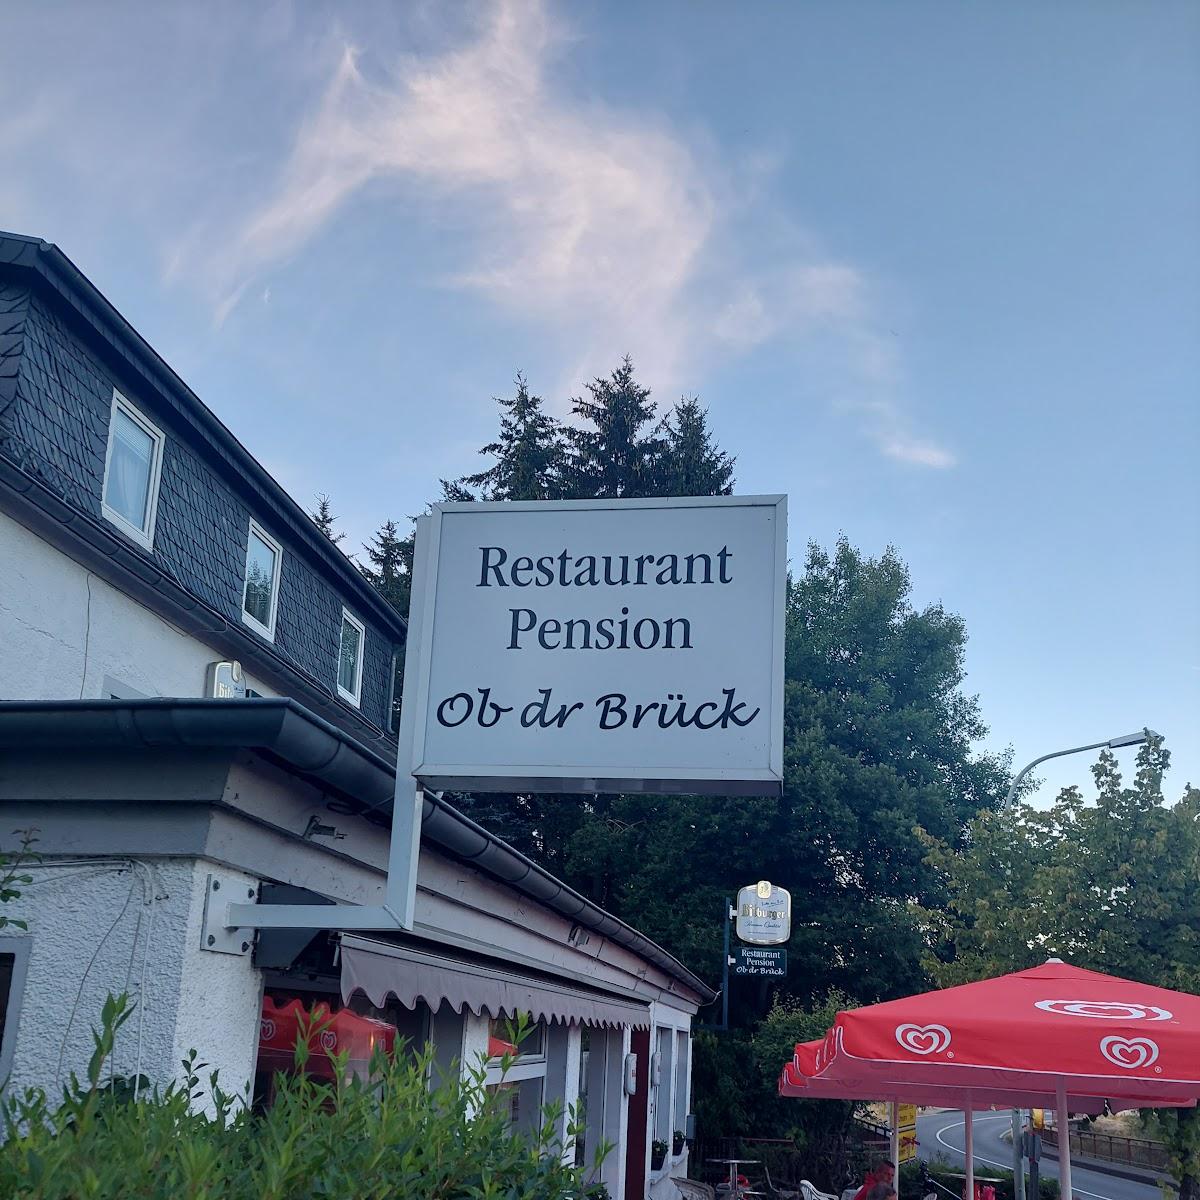 Restaurant "Oberbettingen, Ob dr Brucke" in Hillesheim